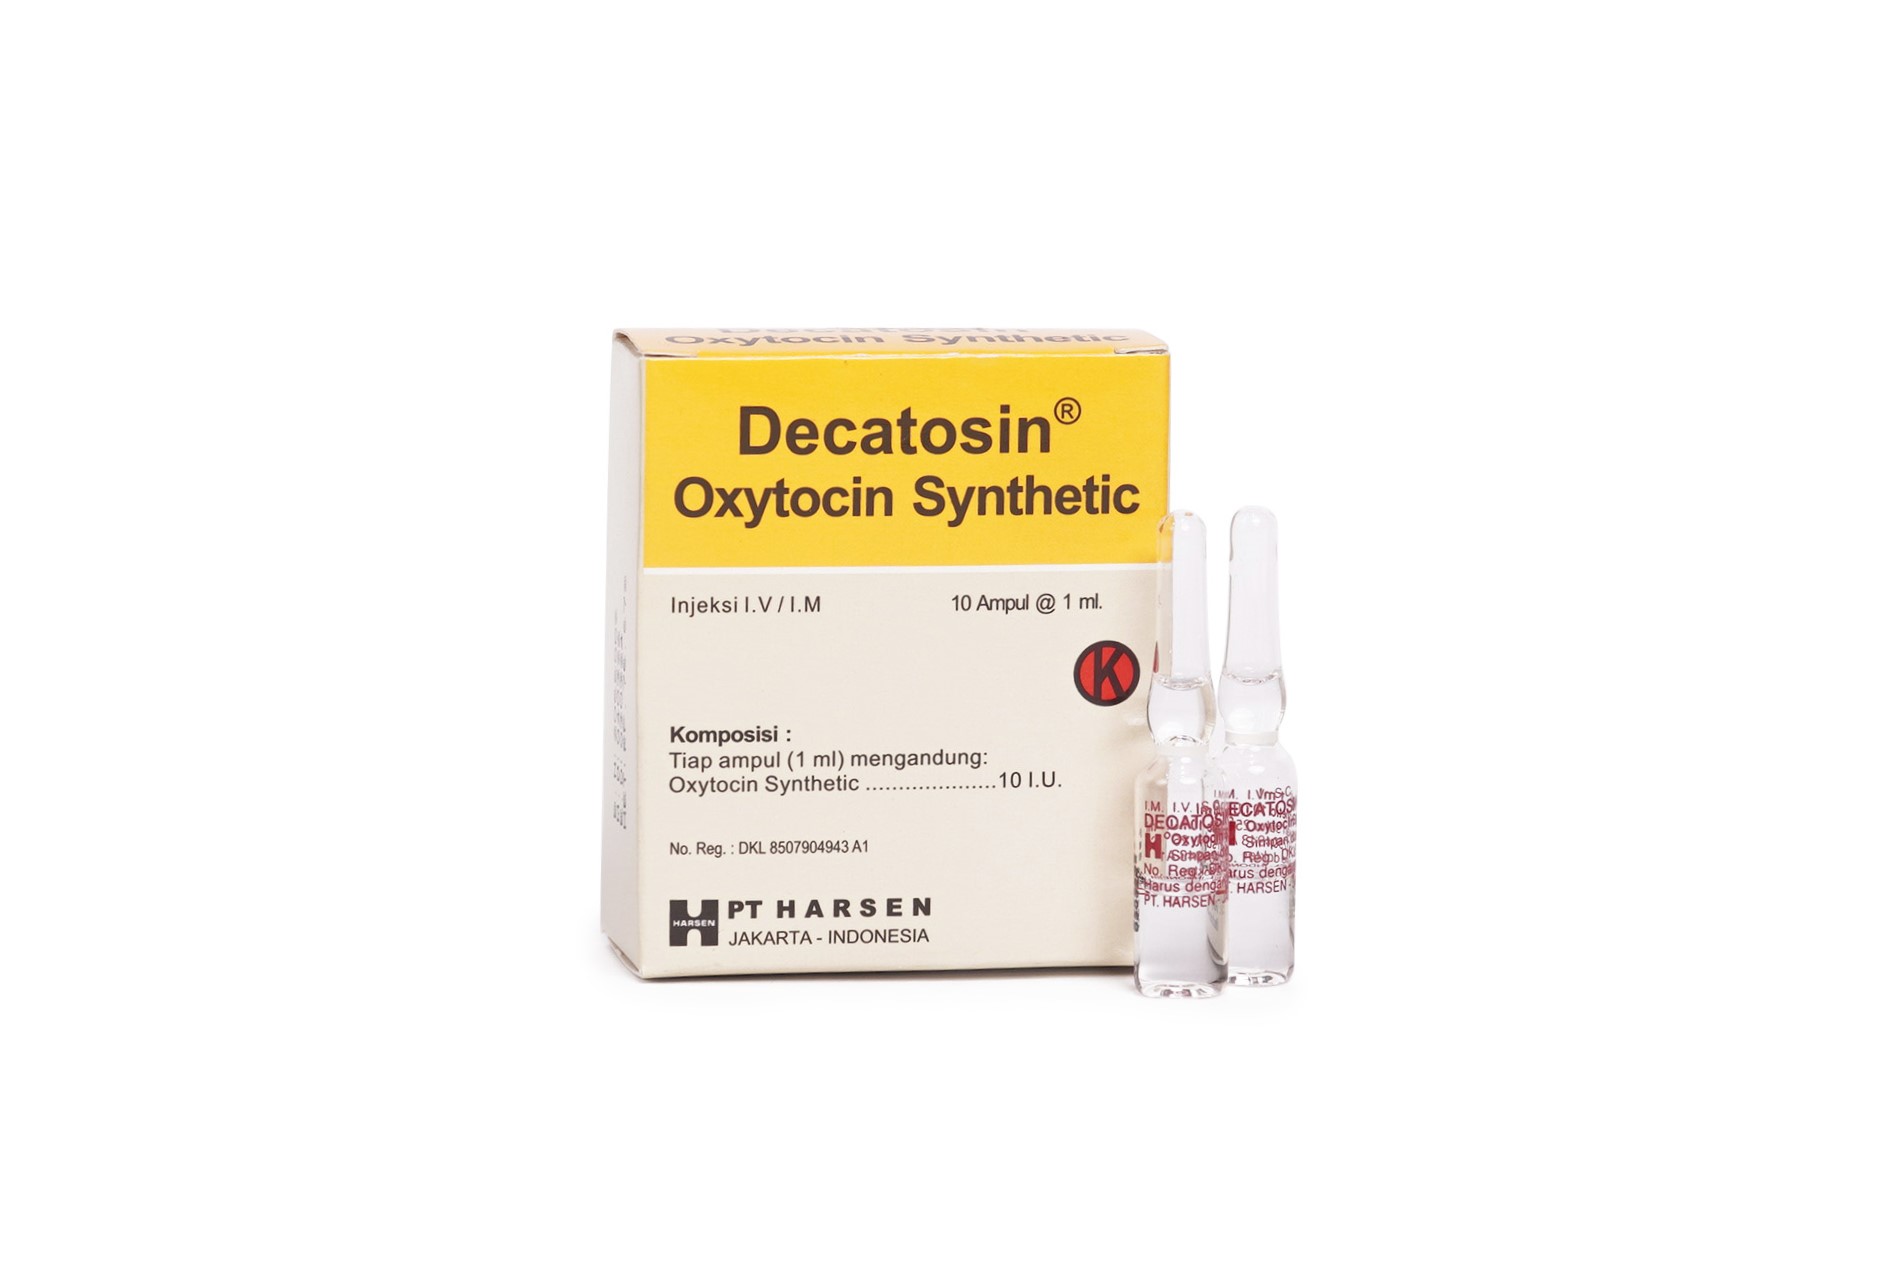 Decatosin